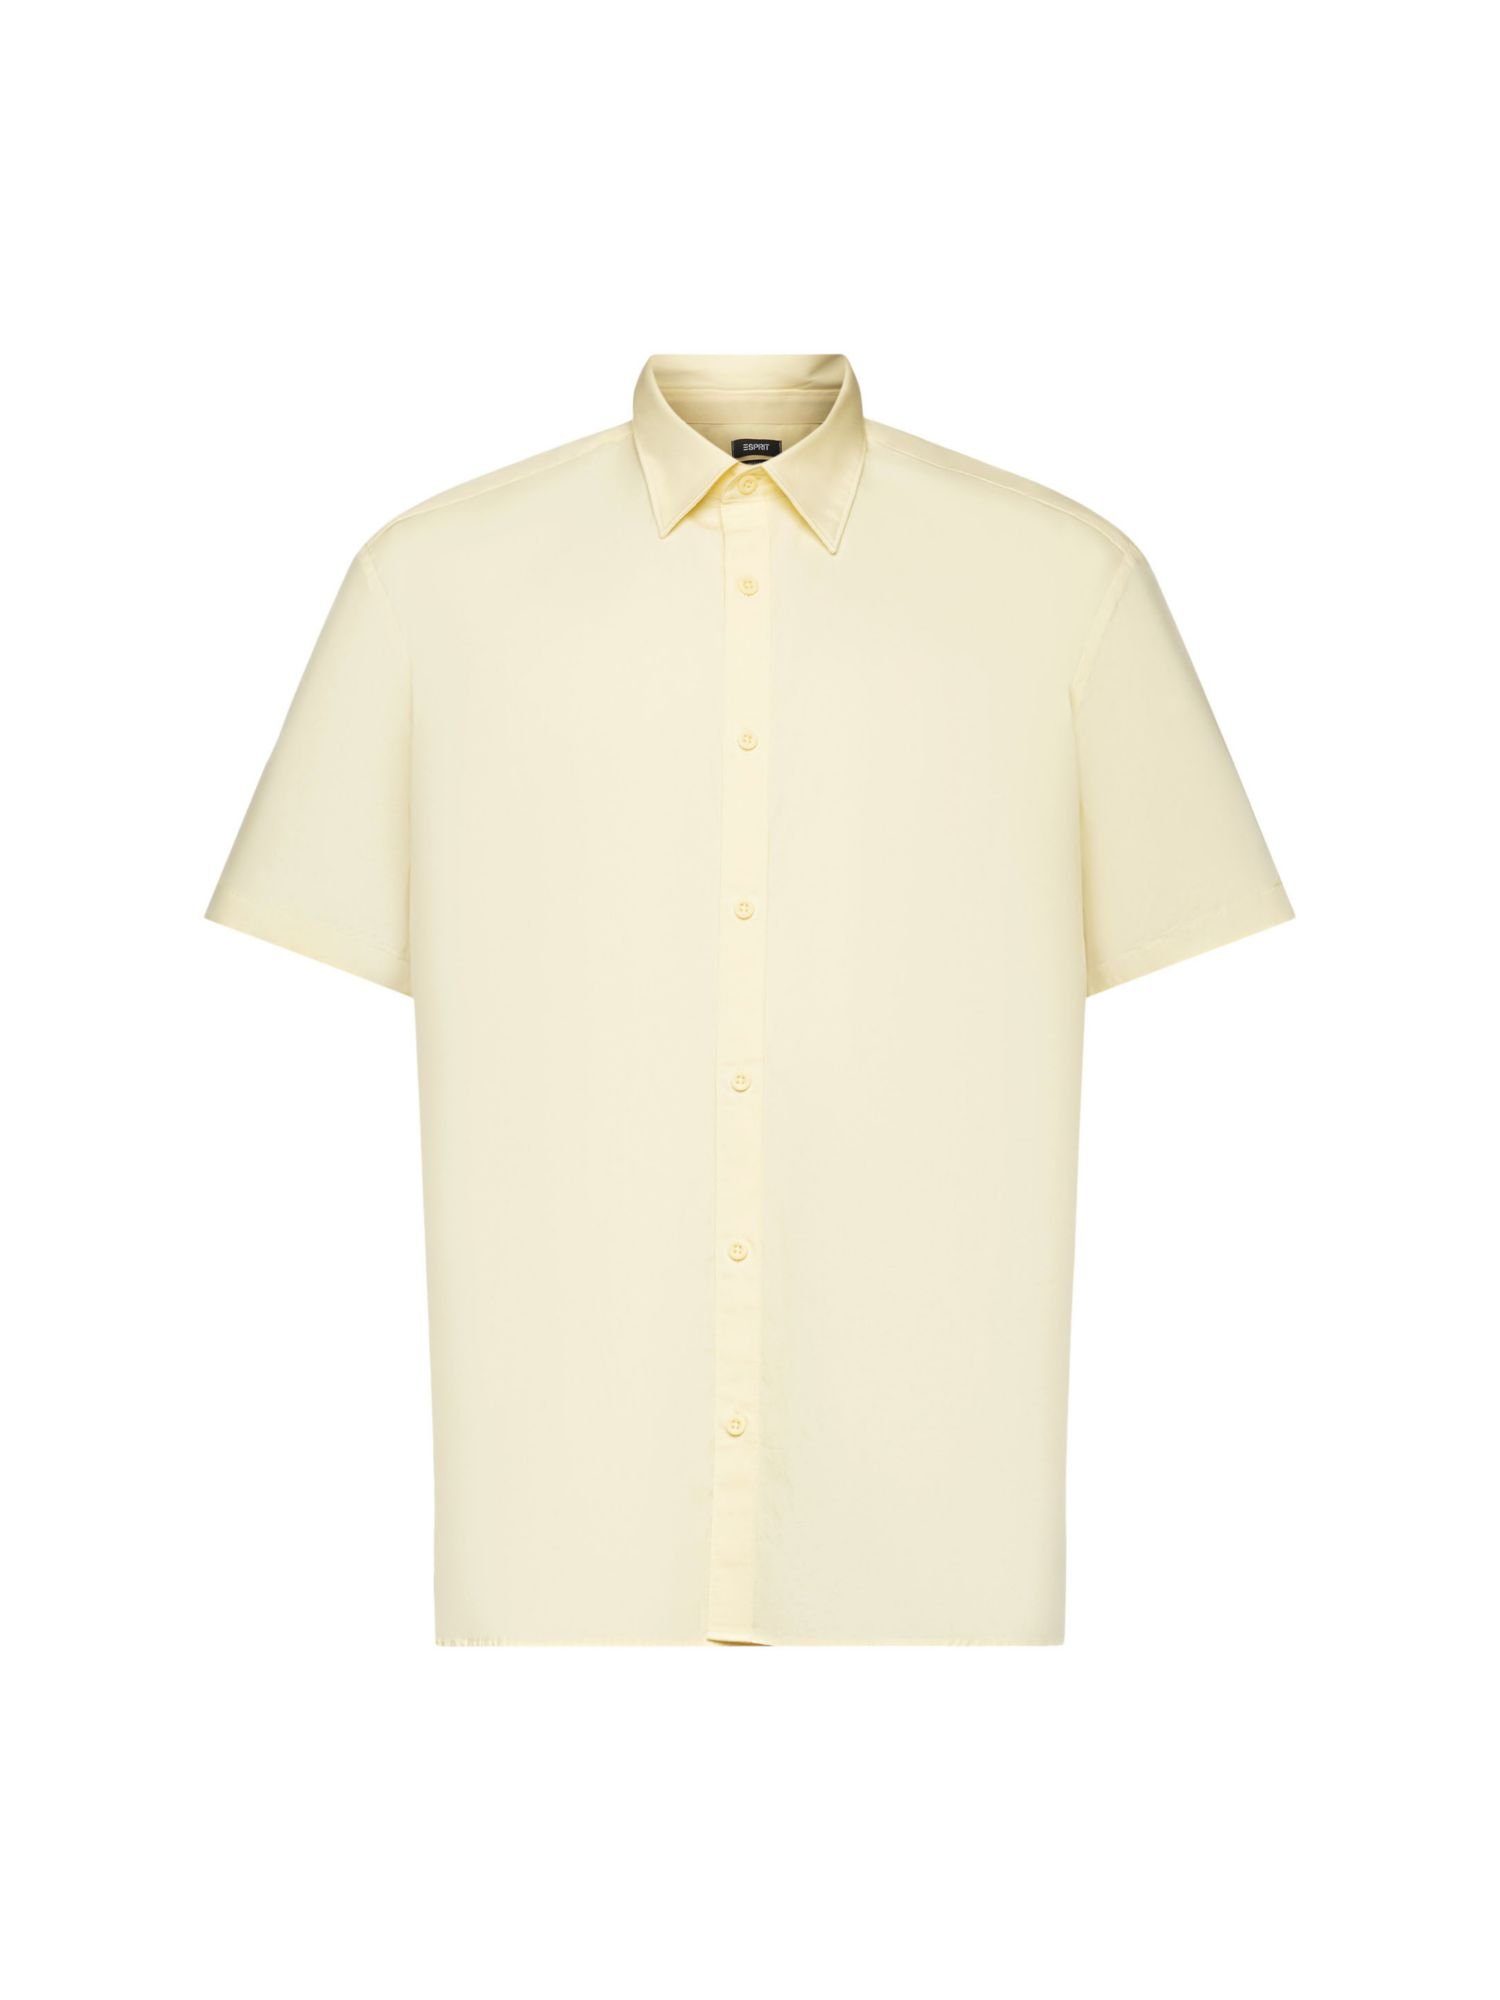 Esprit Collection Businesshemd Kurzärmeliges Hemd